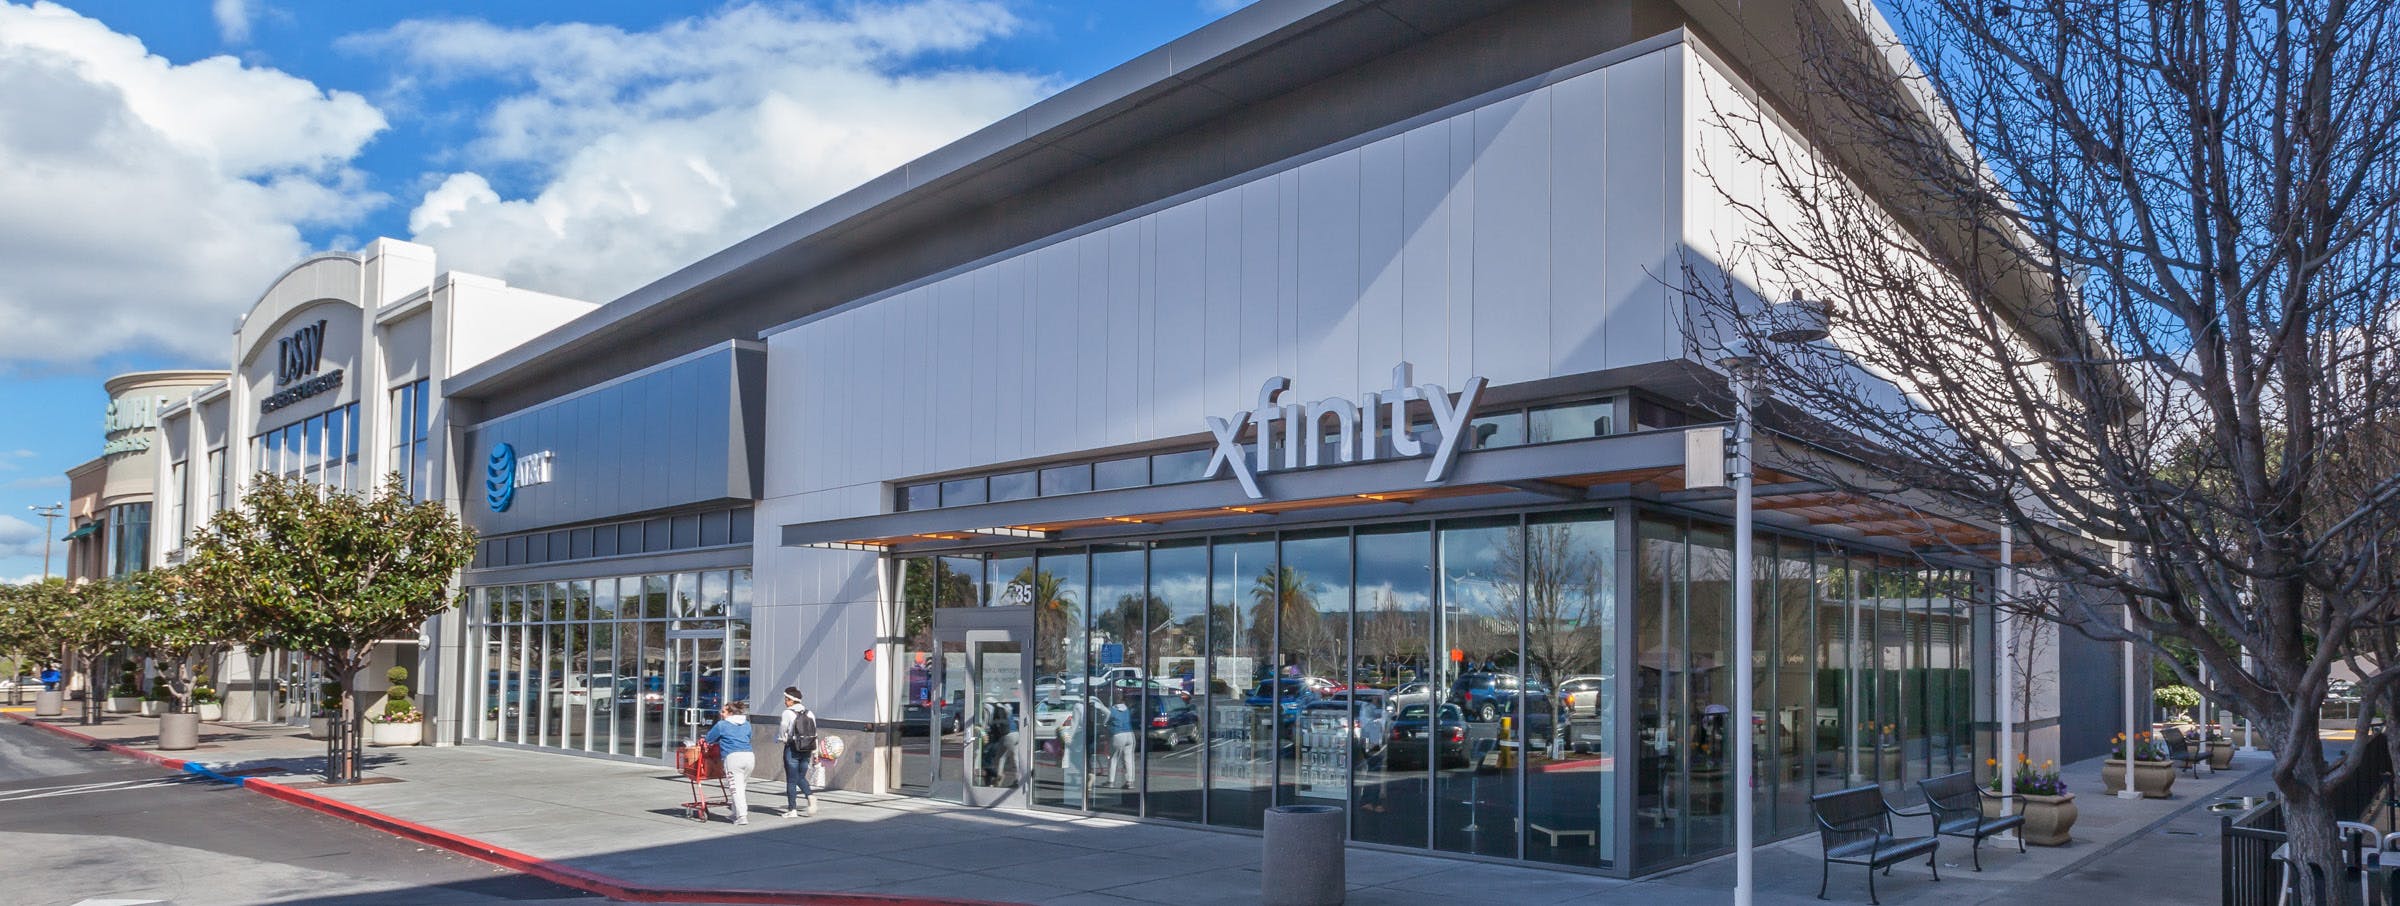 Xfinity San Mateo Hillsdale Shopping Center